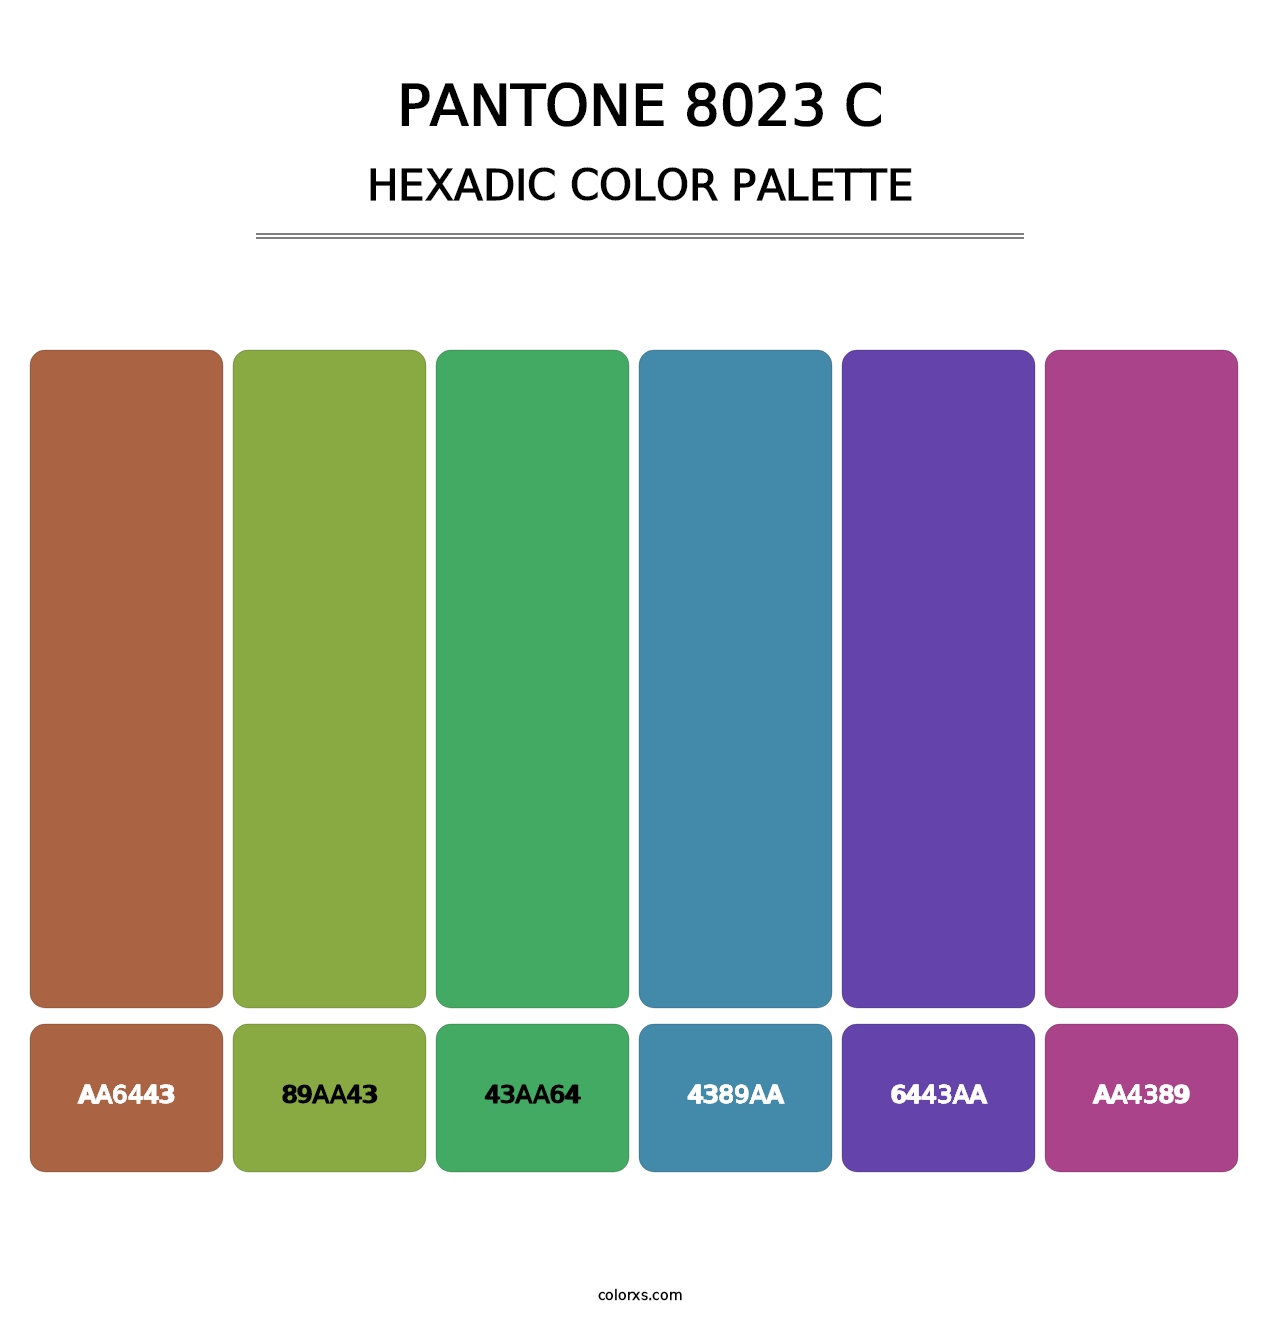 PANTONE 8023 C - Hexadic Color Palette